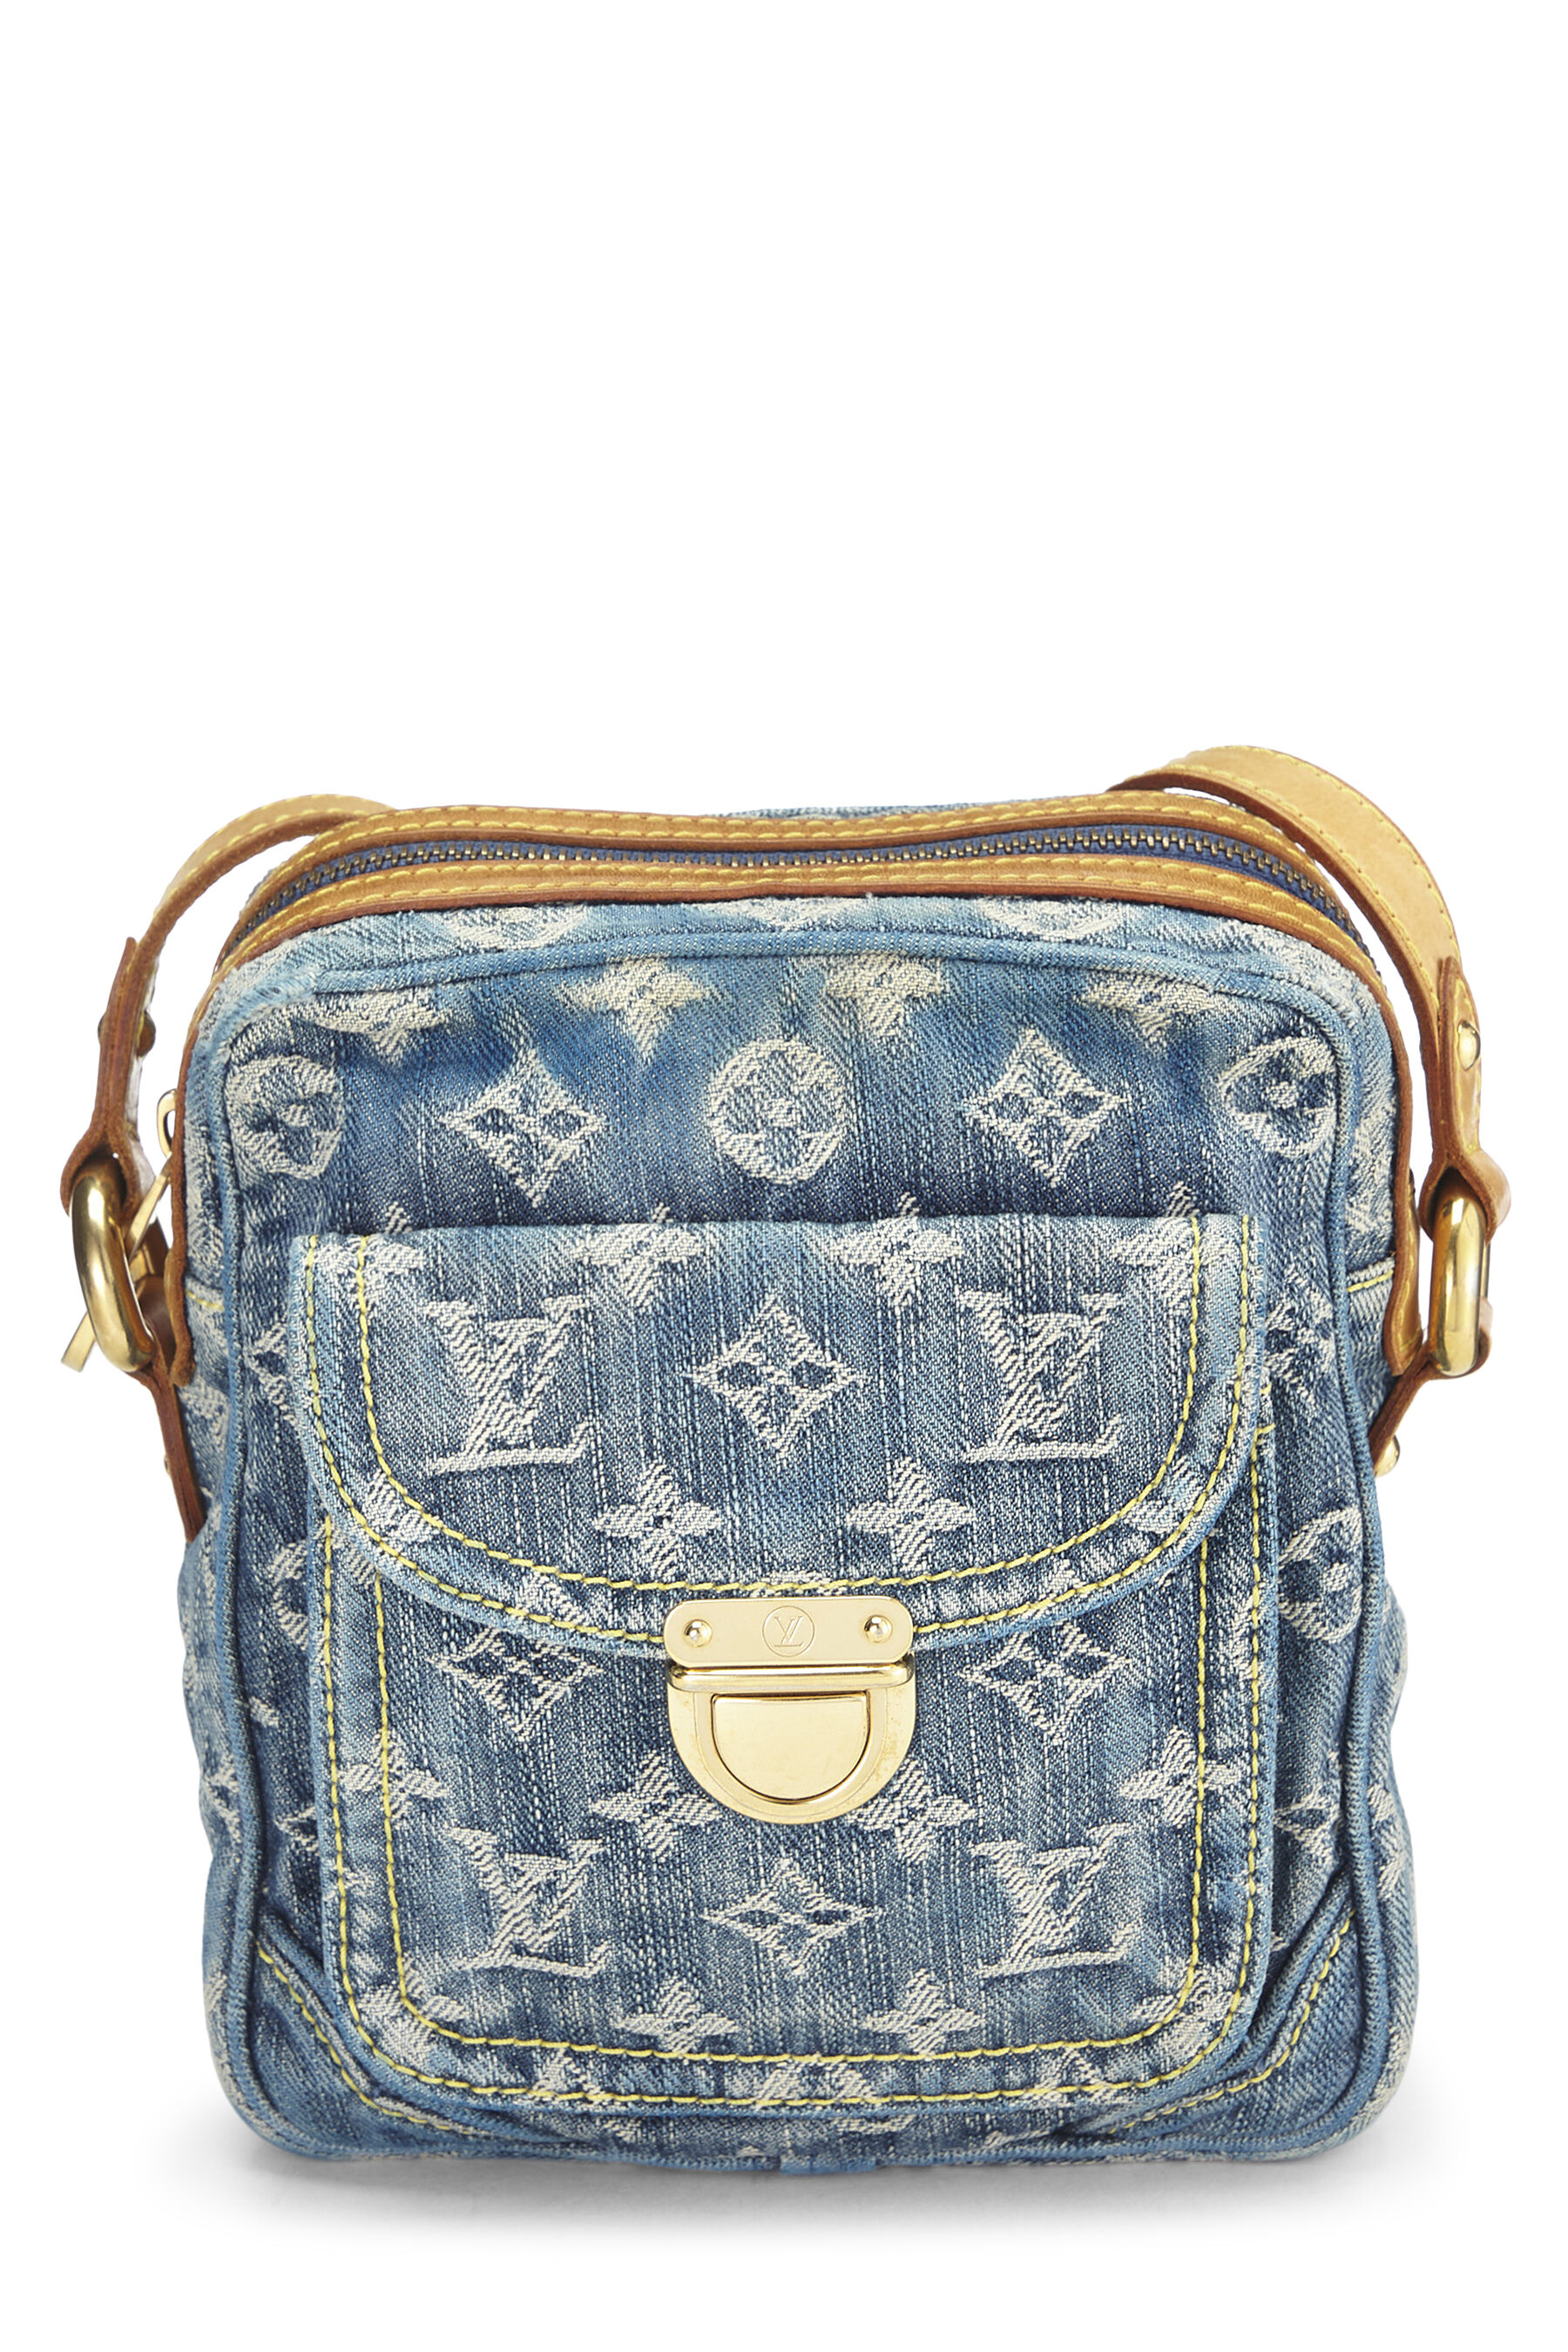 Louis Vuitton - Blue Monogram Denim Camera Bag